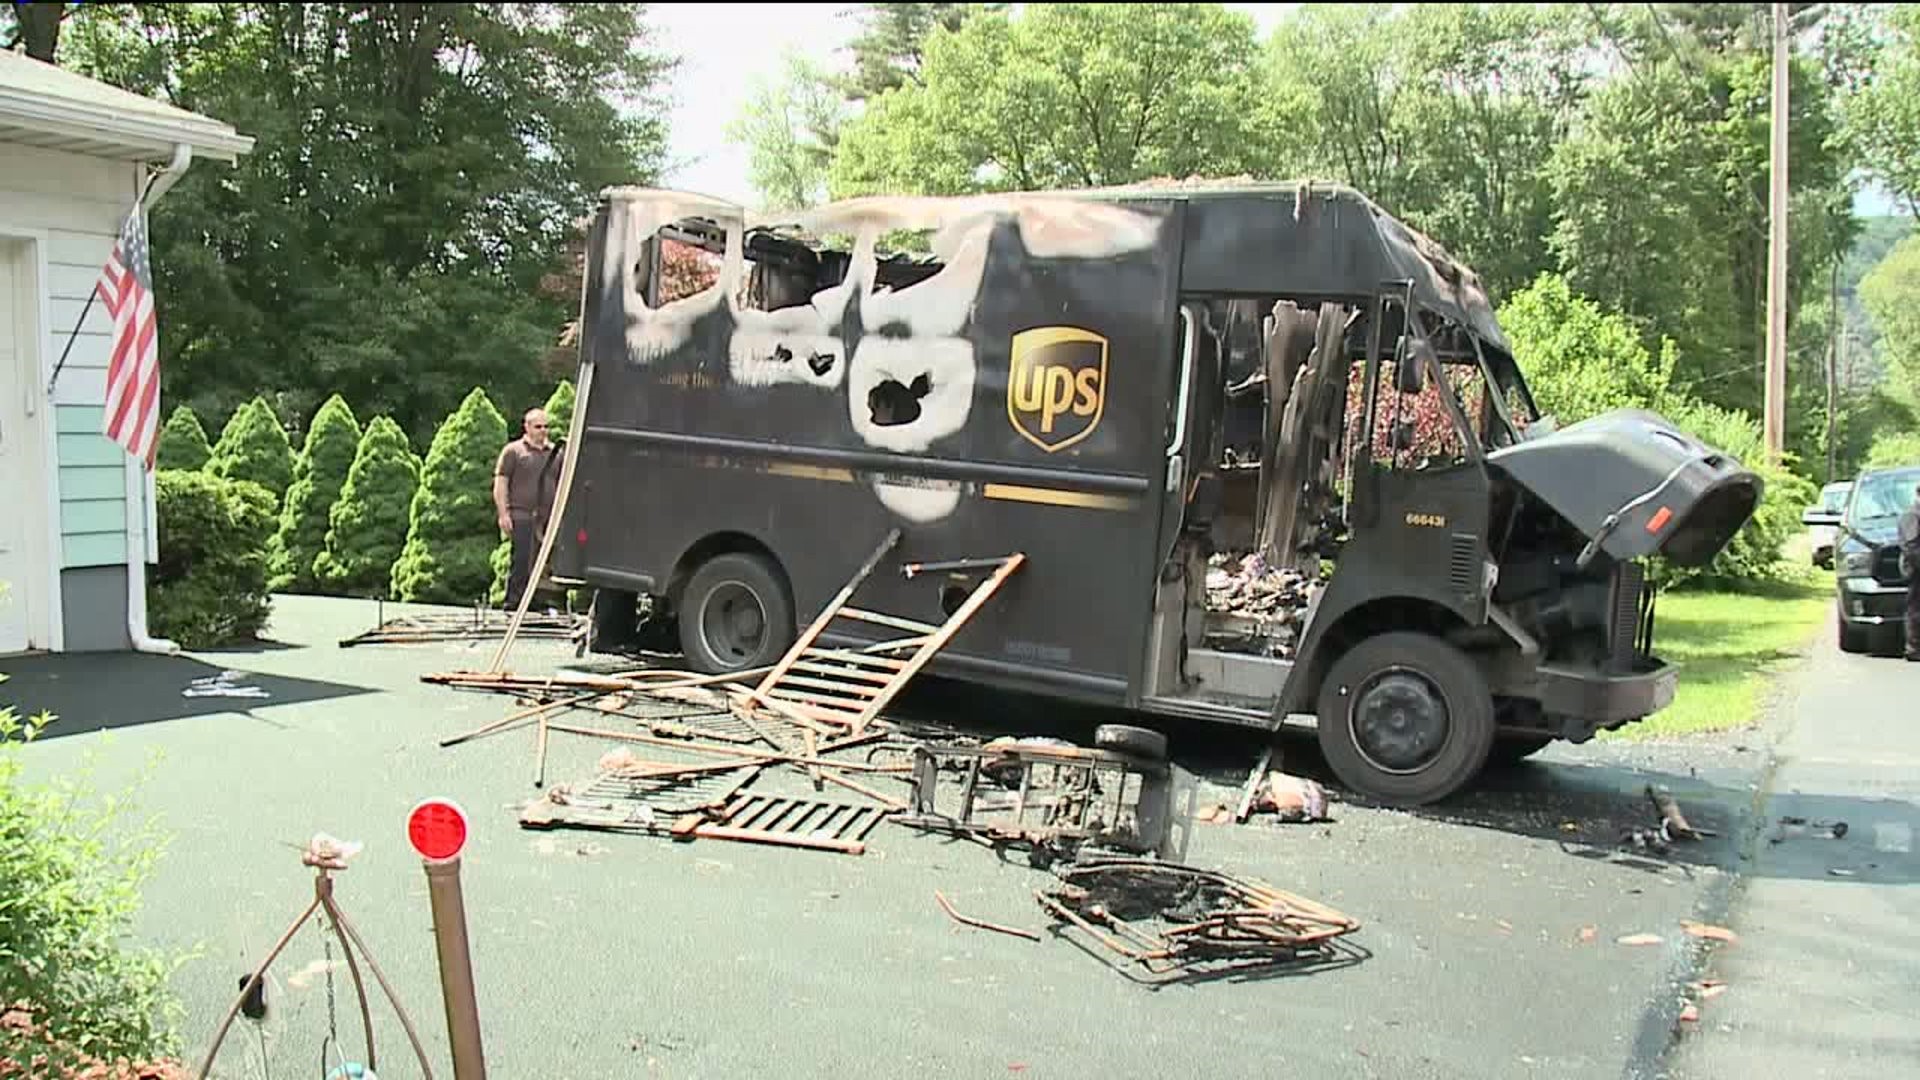 Investigators Rule UPS Truck Fire Not Suspicious